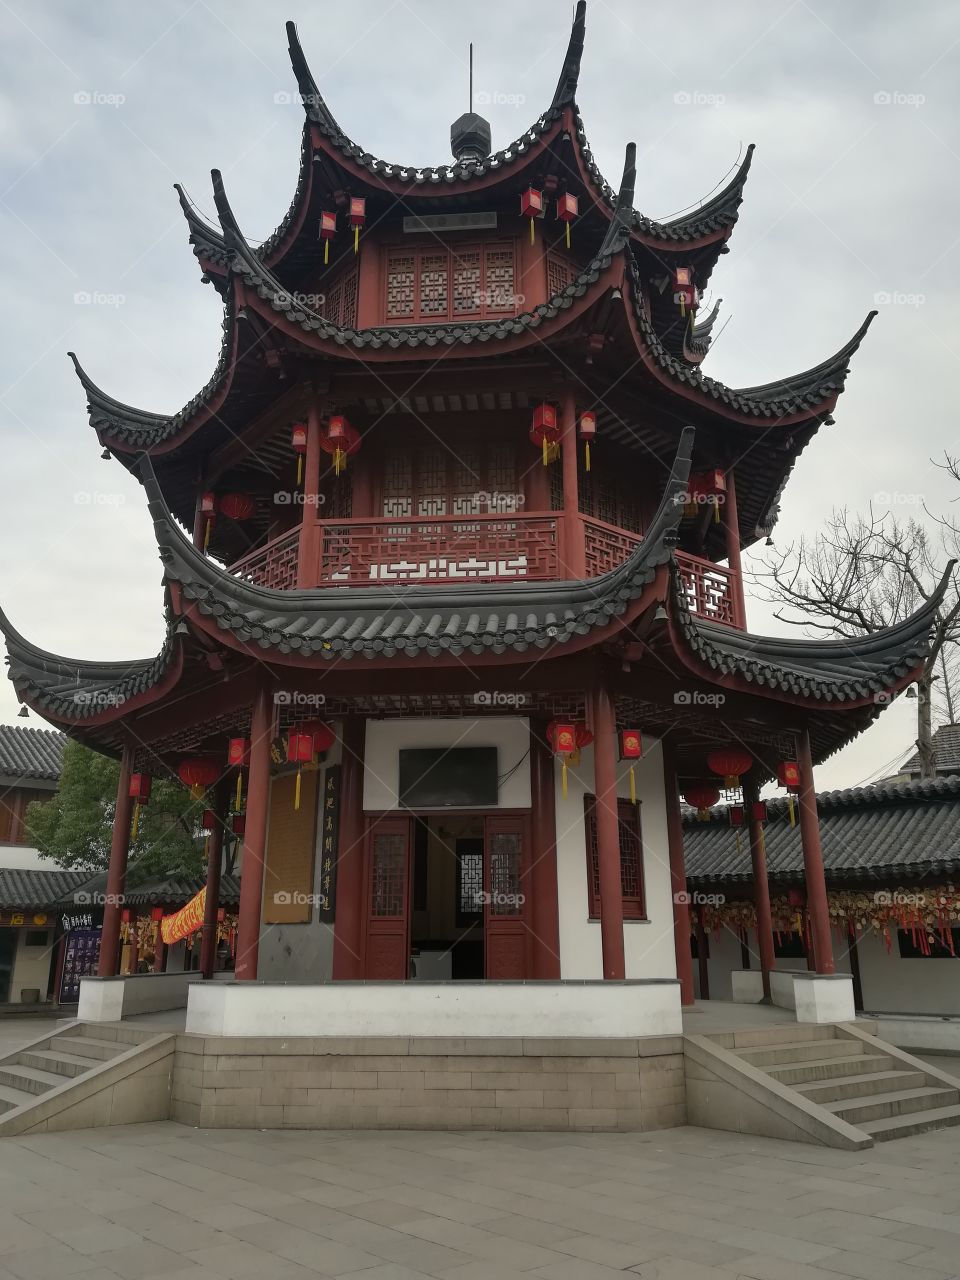 China town shanghai qi bao